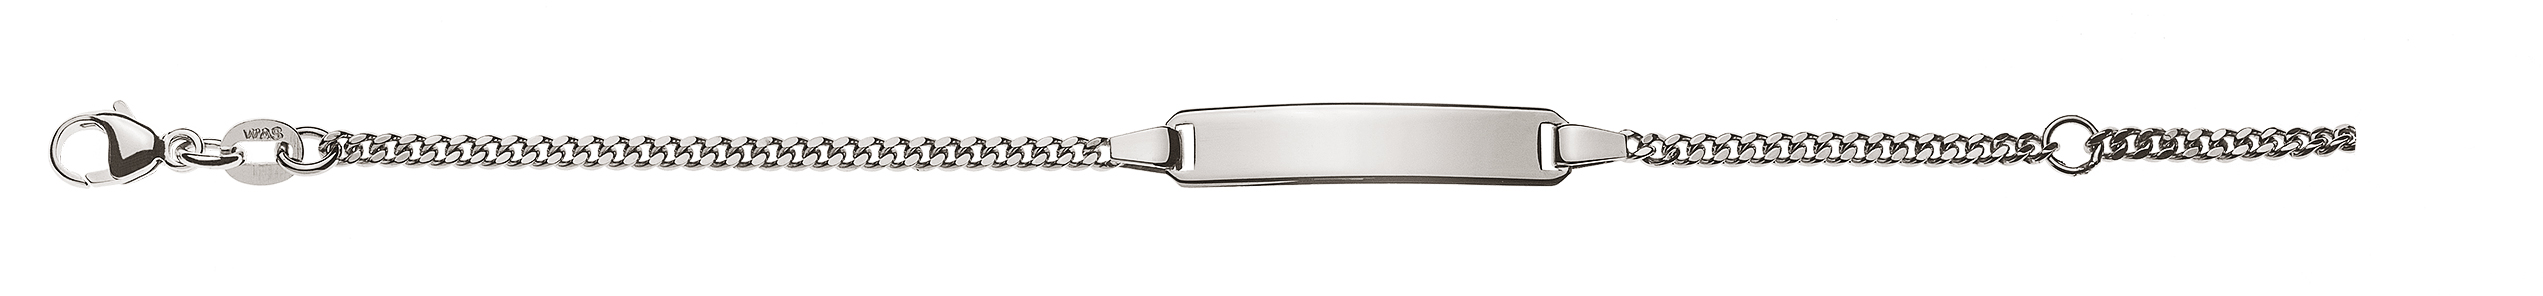 AURONOS Style ID-Bracelet en or blanc 9k Chaîne blindée 16cm